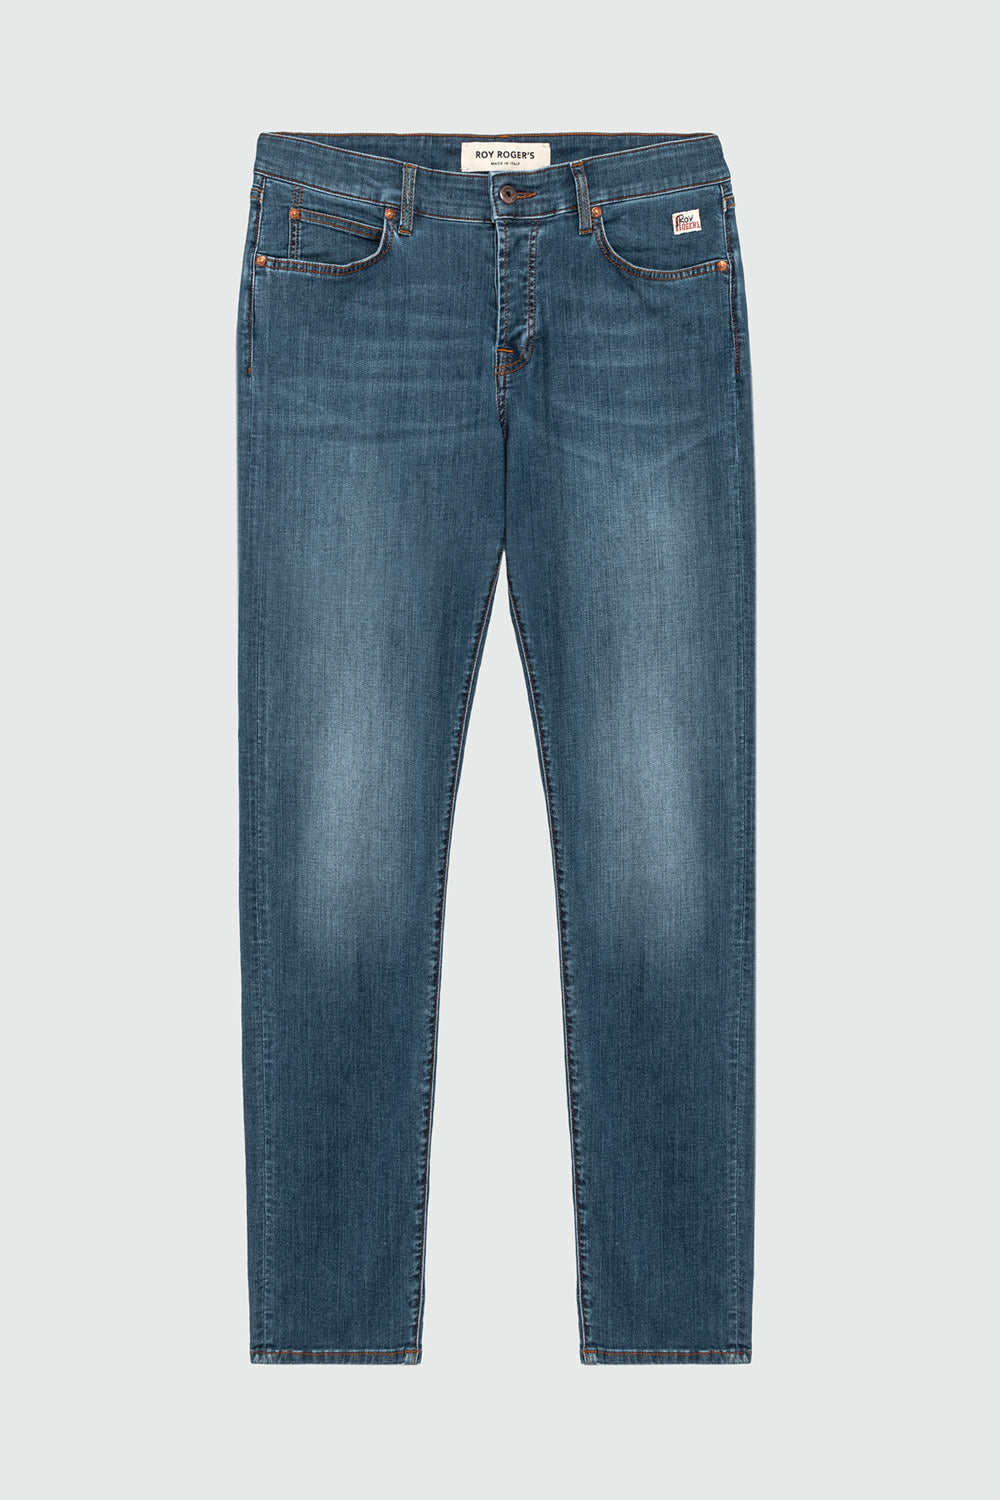 Jeans new 529 paul